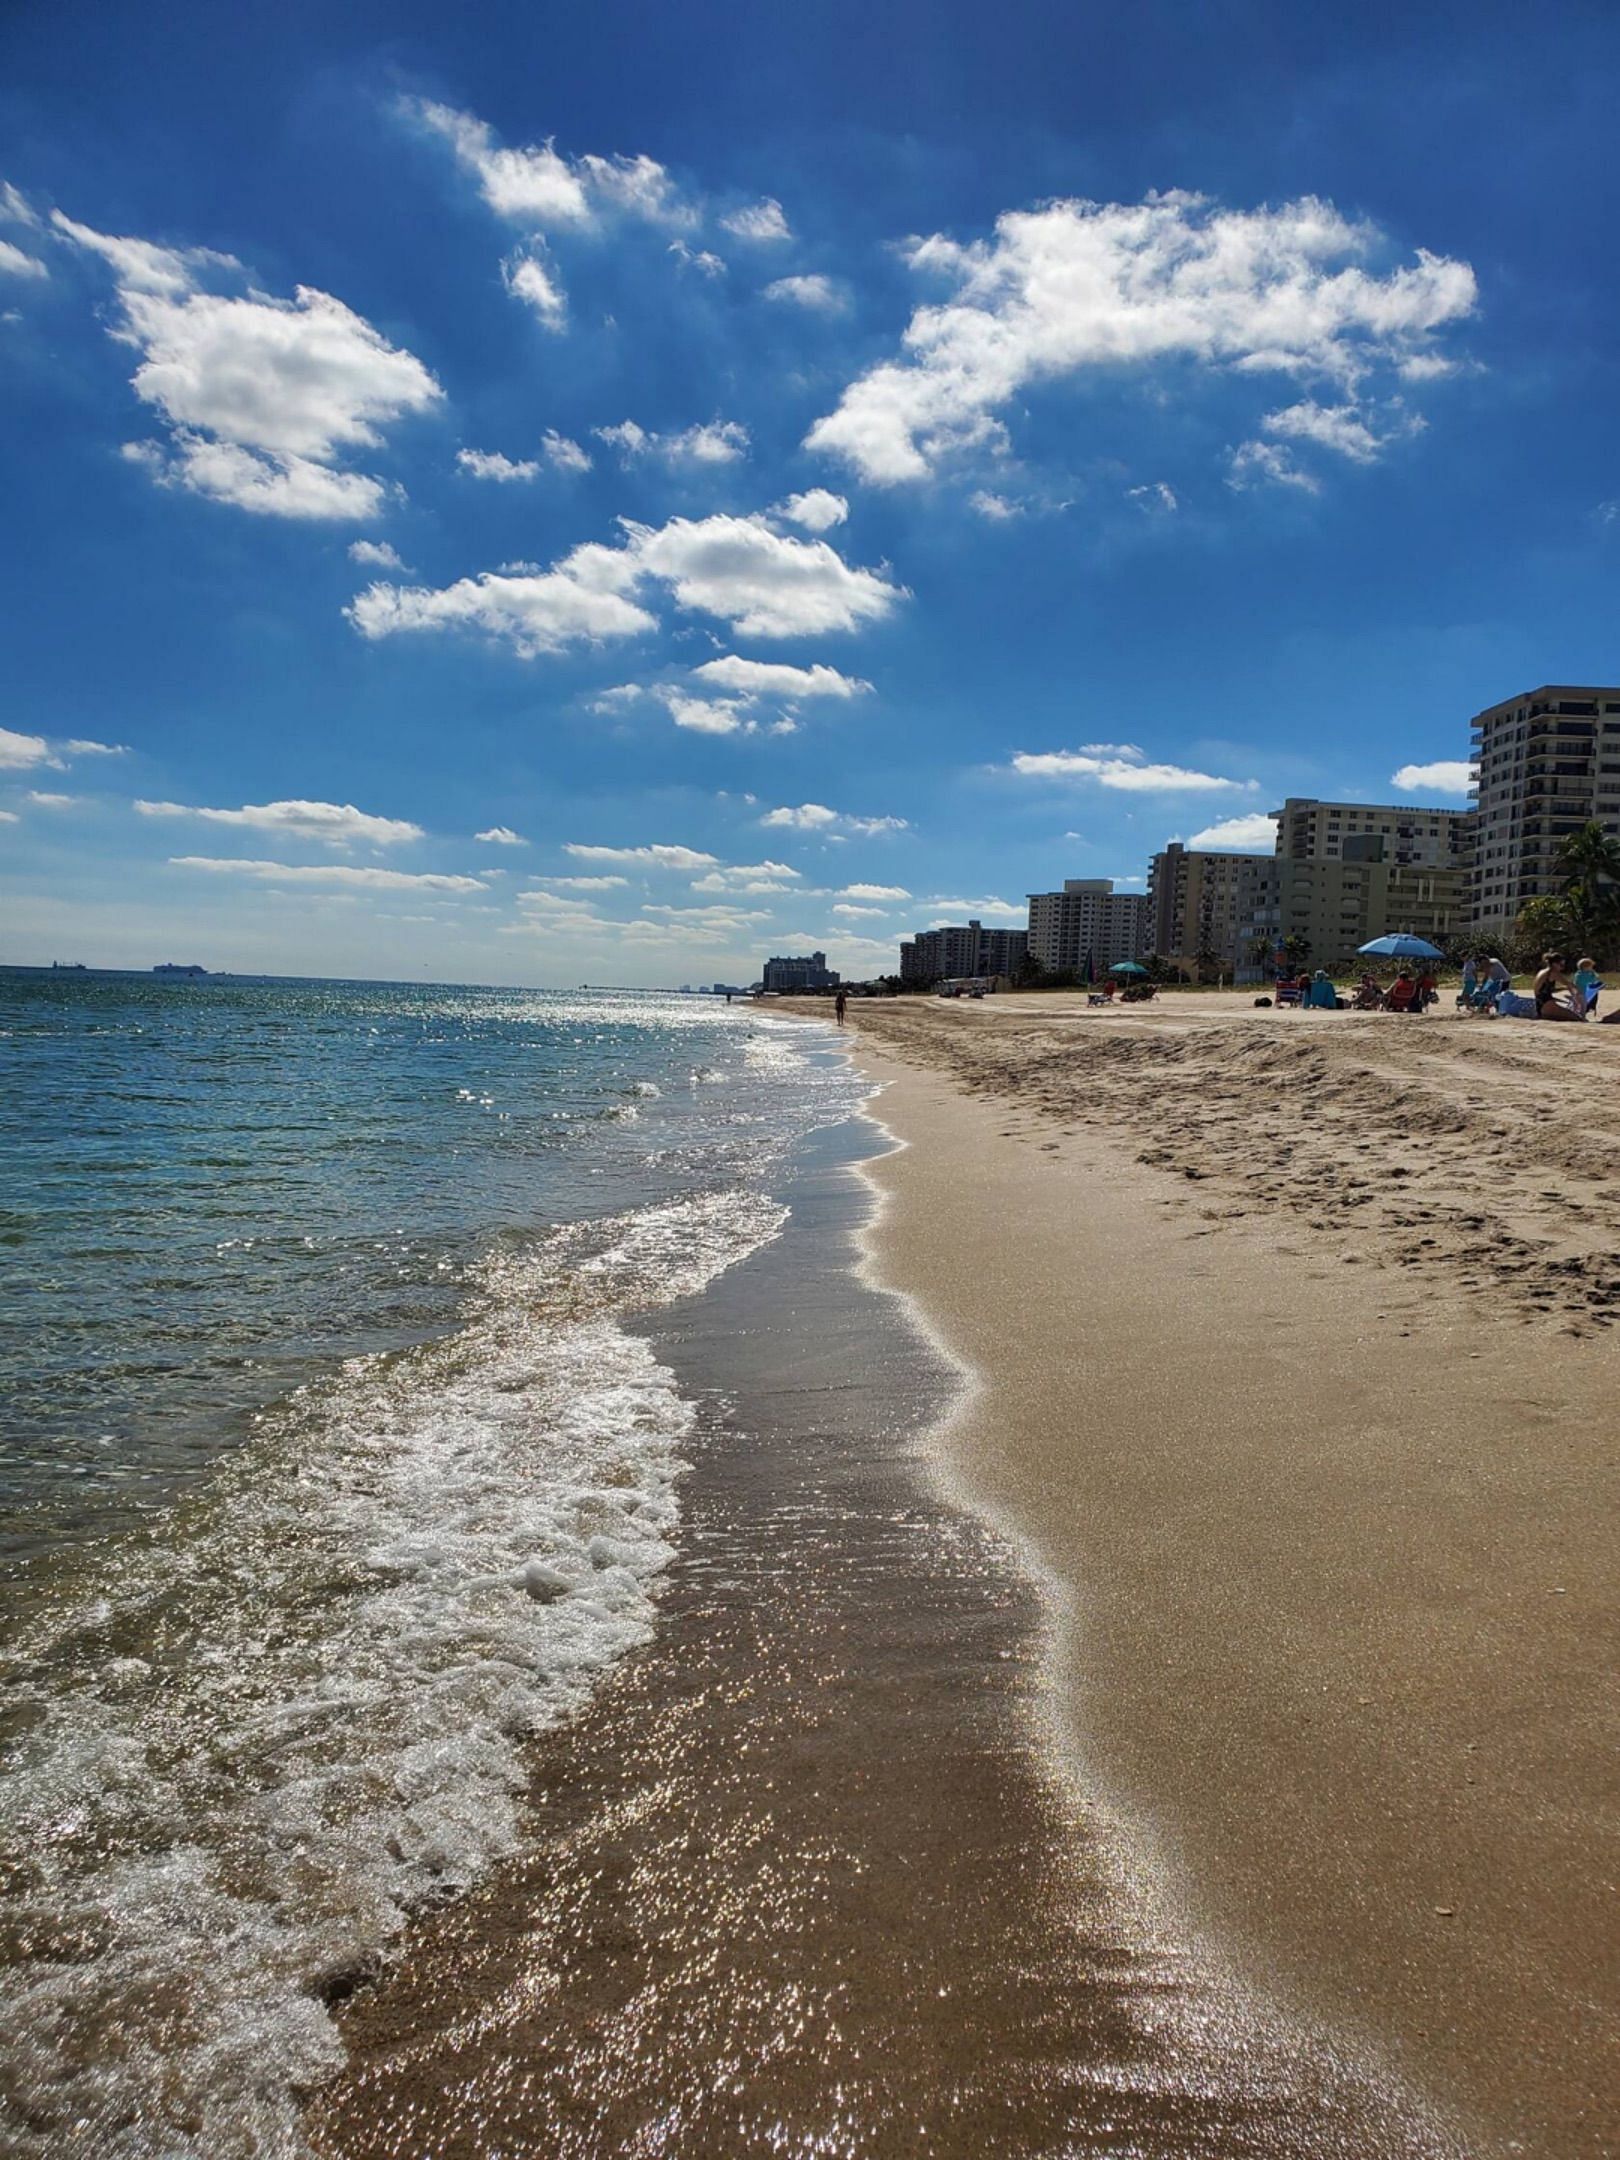 JWguest Condominium at Lauderdale-by-the-Sea, Florida | Pompano 5 minute walk to the beach | Jwbnb no brobnb 24